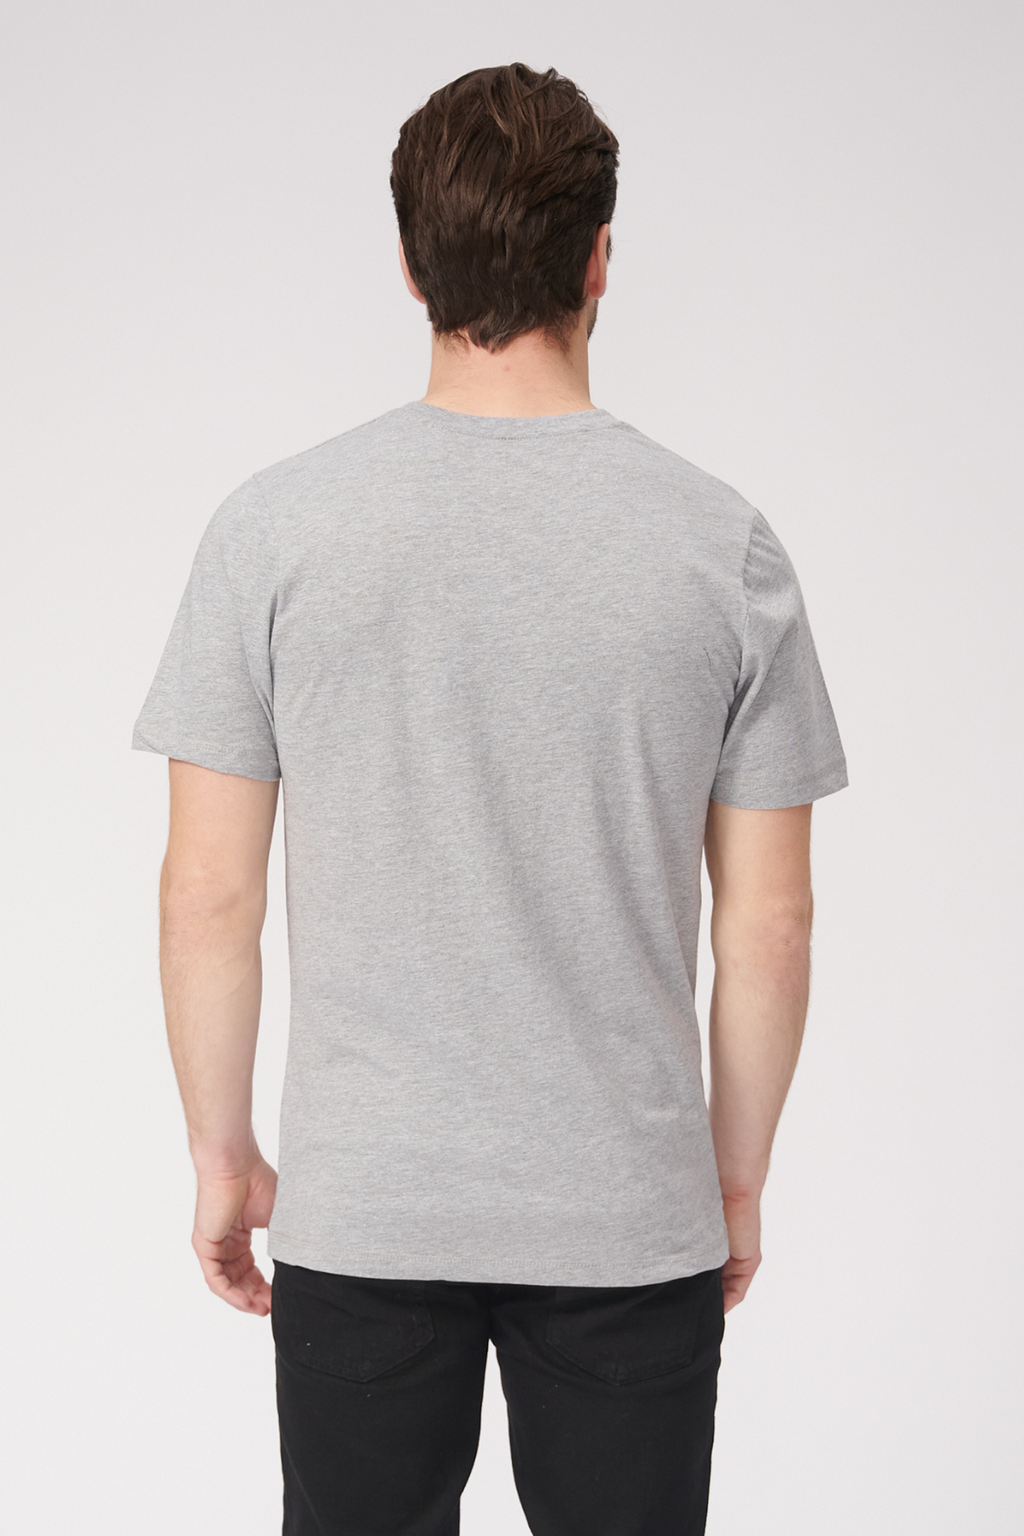 Basic Vneck t-shirt - Oxford Grå